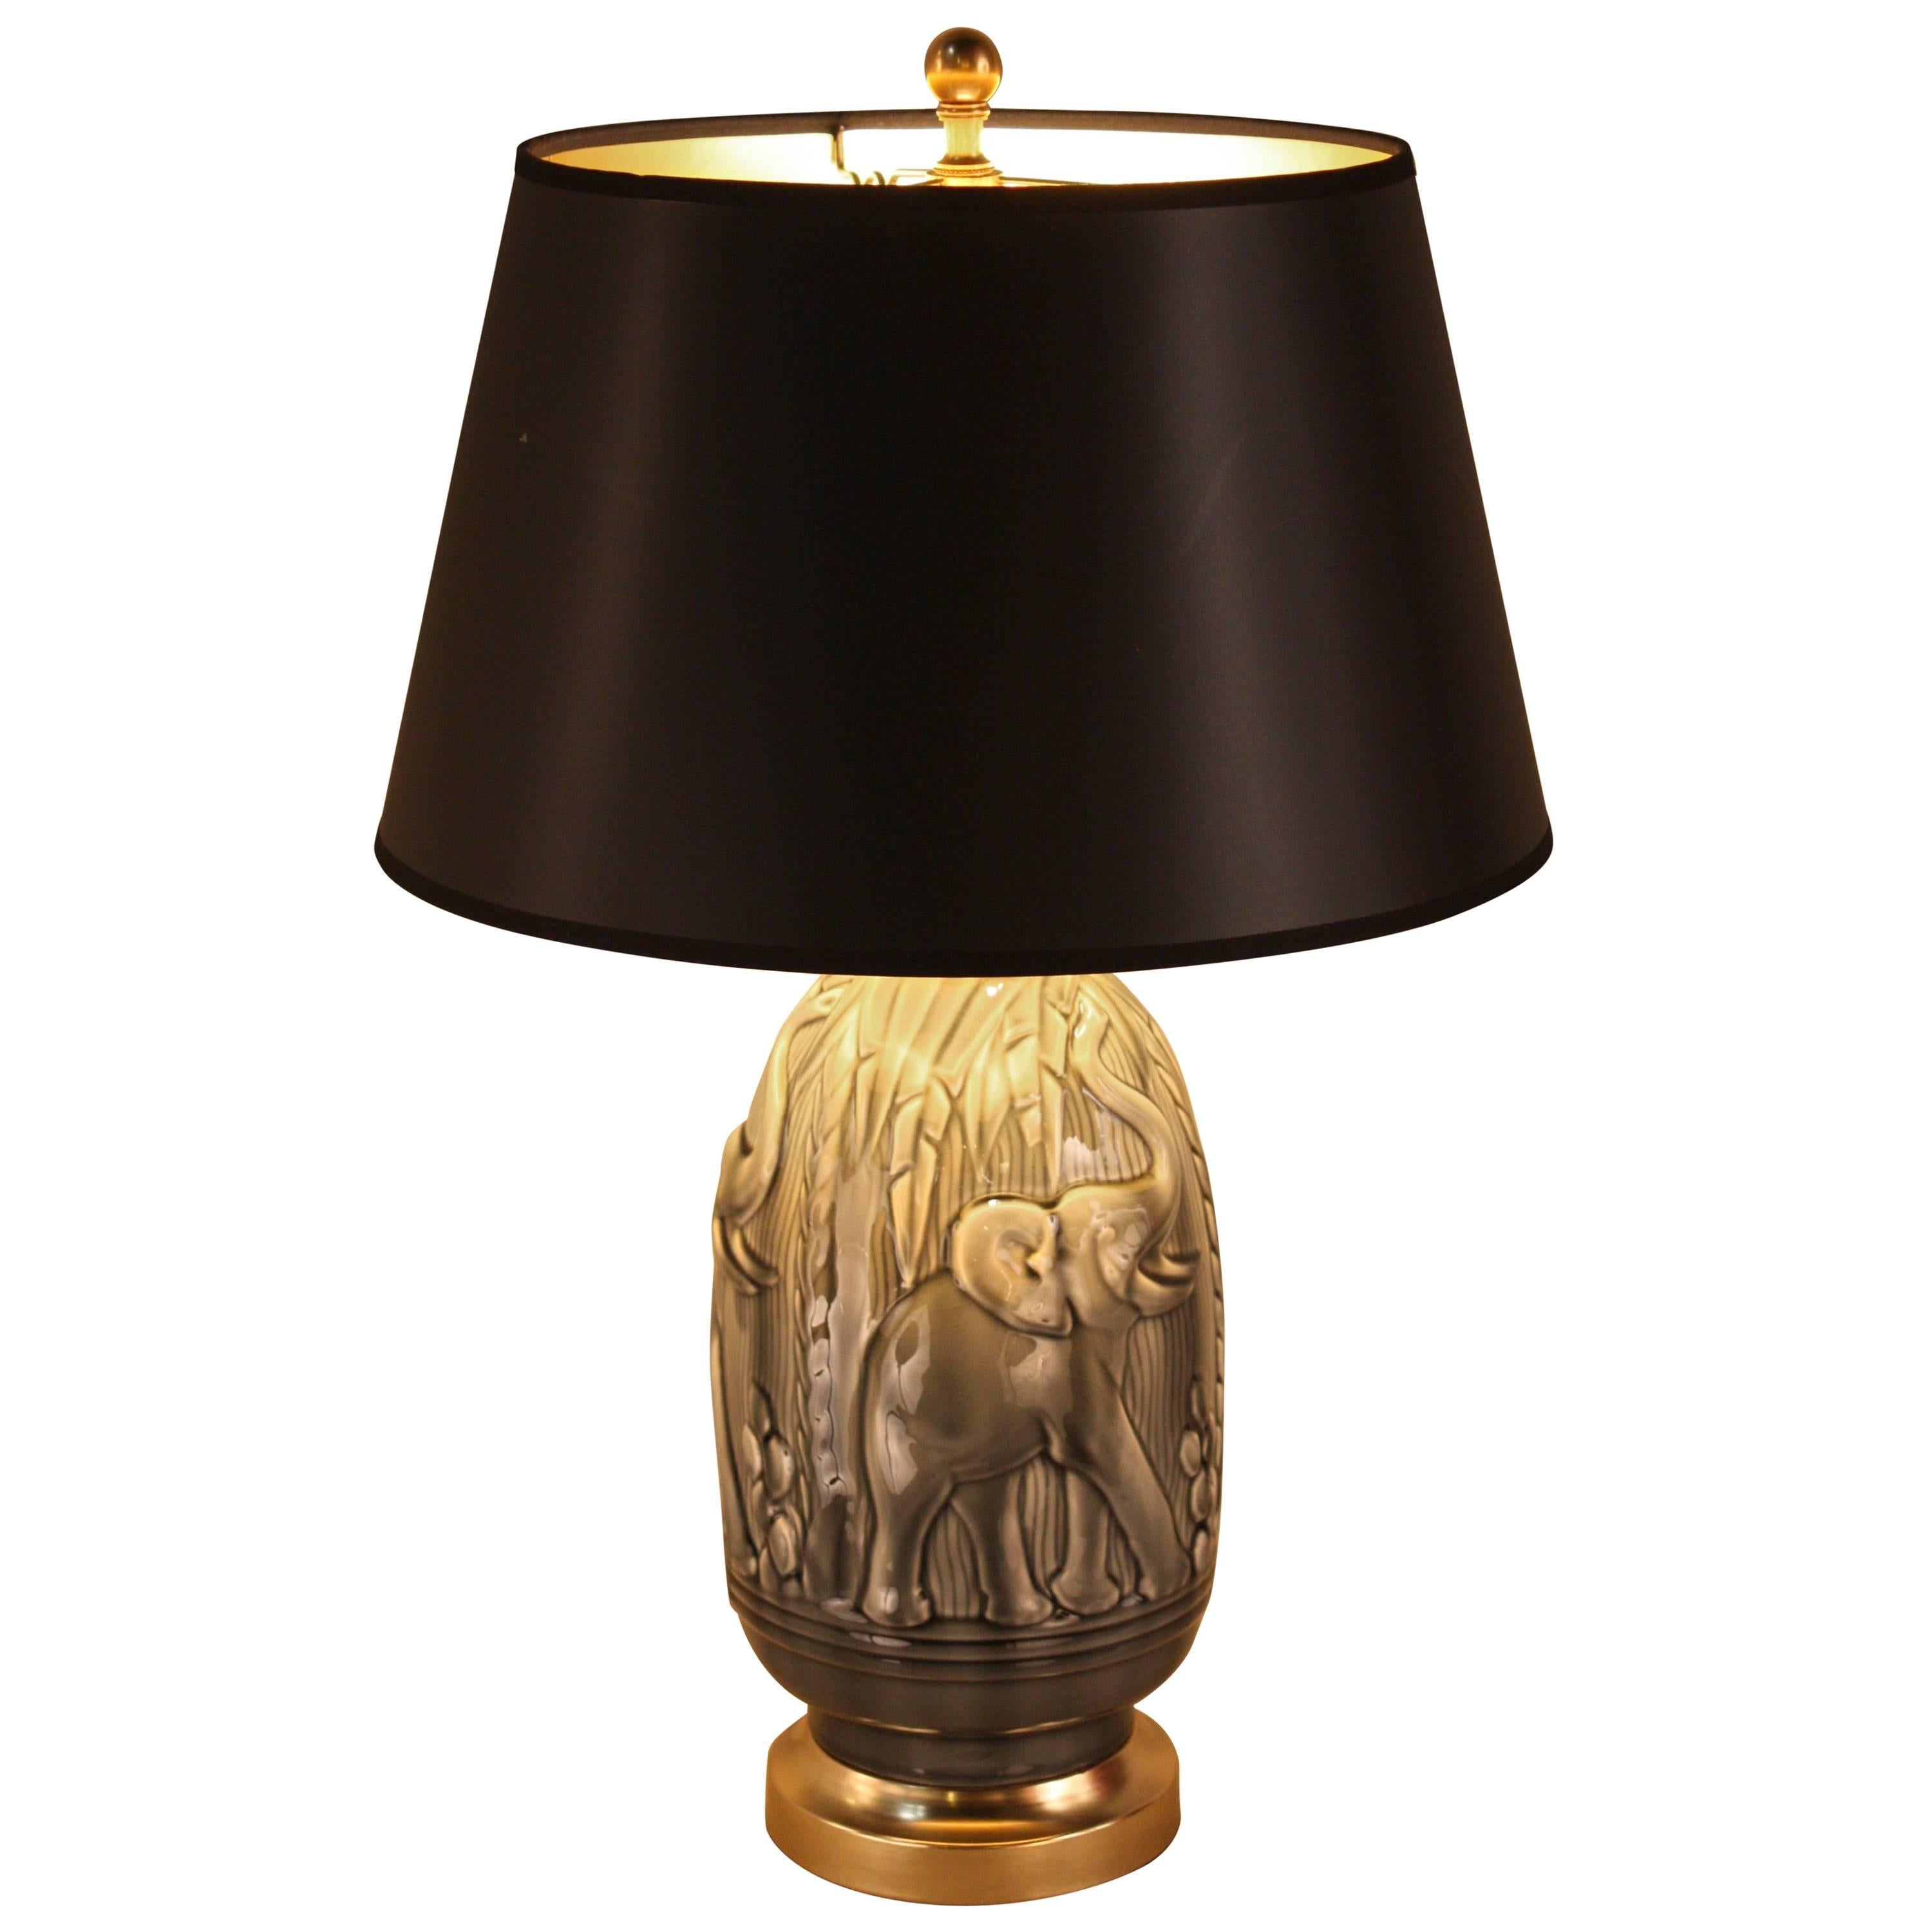 Elegant Pottery Table Lamp with Elephant Motif